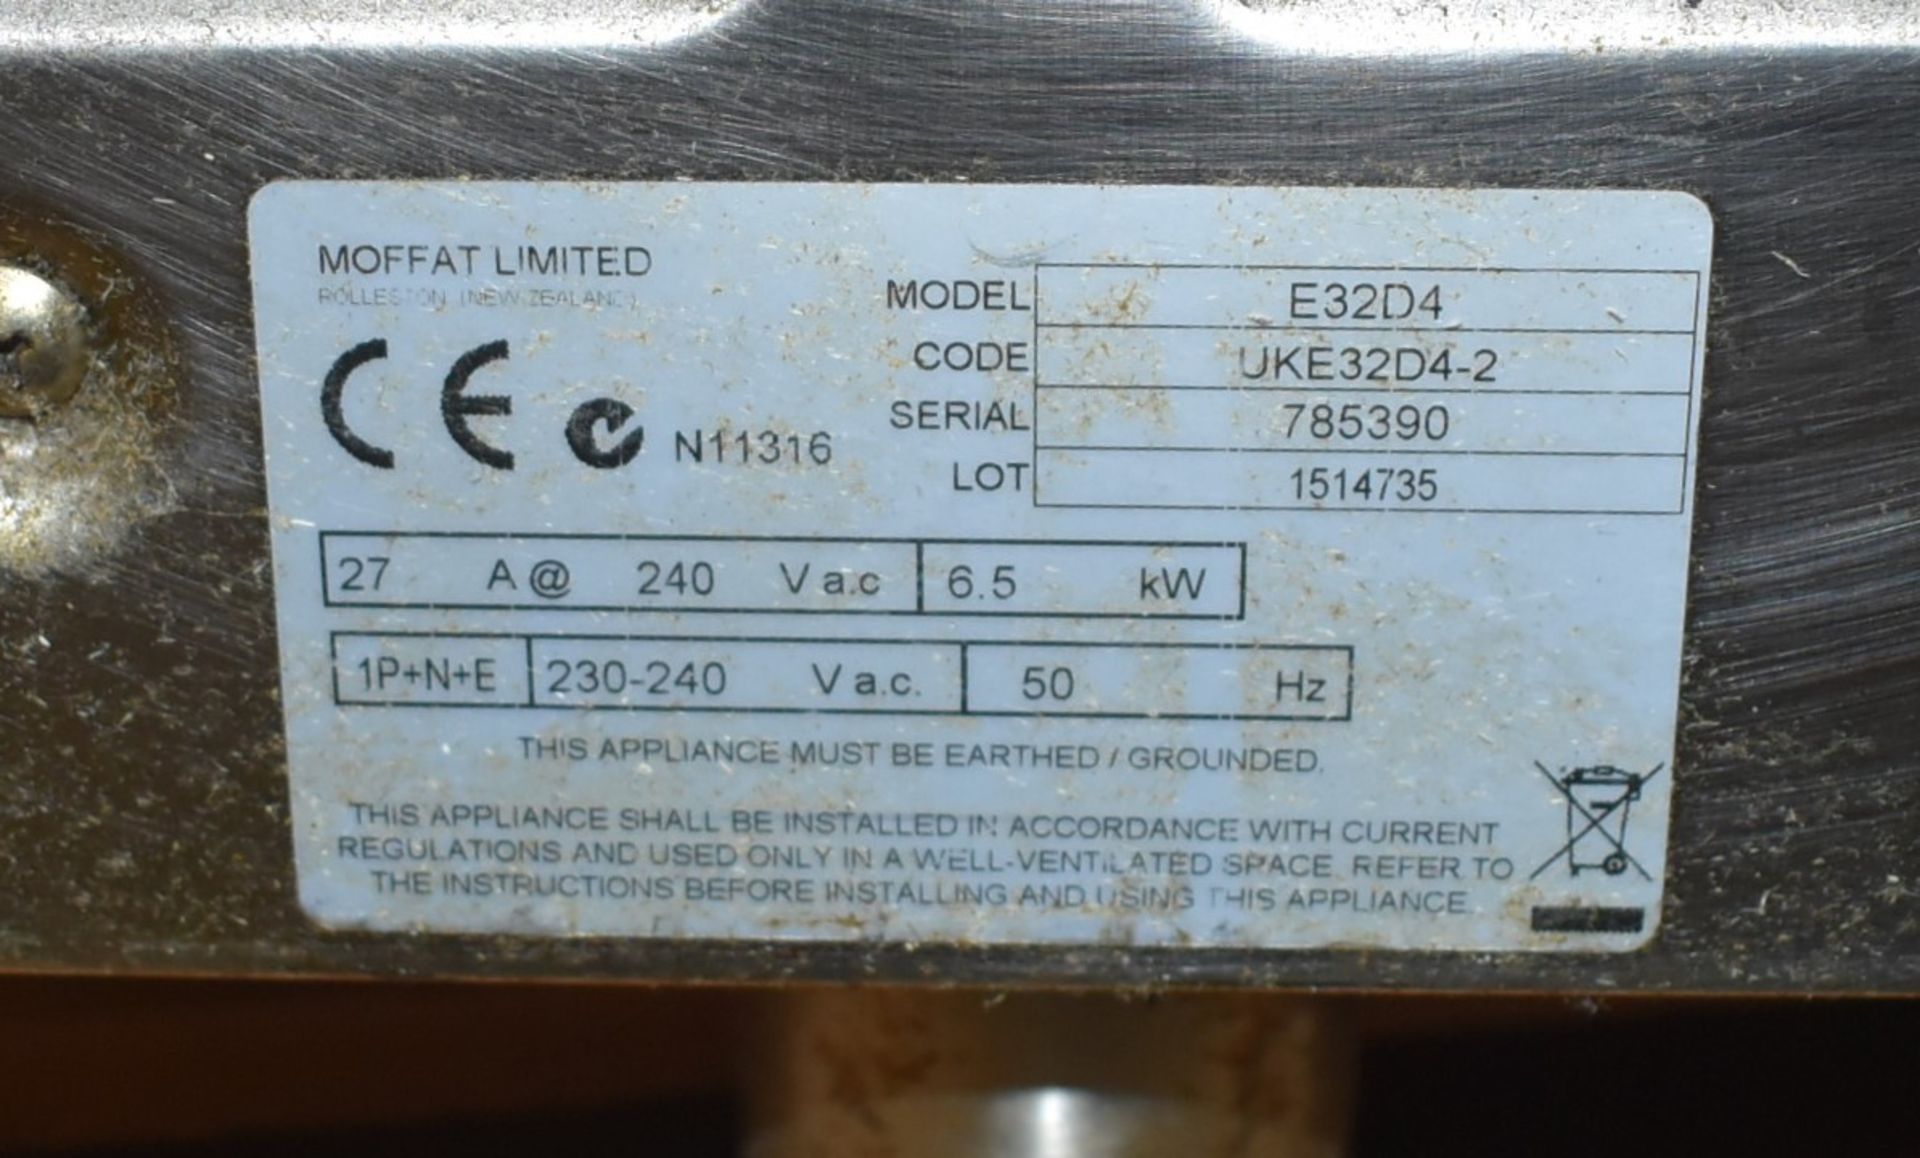 1 x Turbo Fan E31 Electric Convection Oven - Model E32D4 - 240V - Image 6 of 7